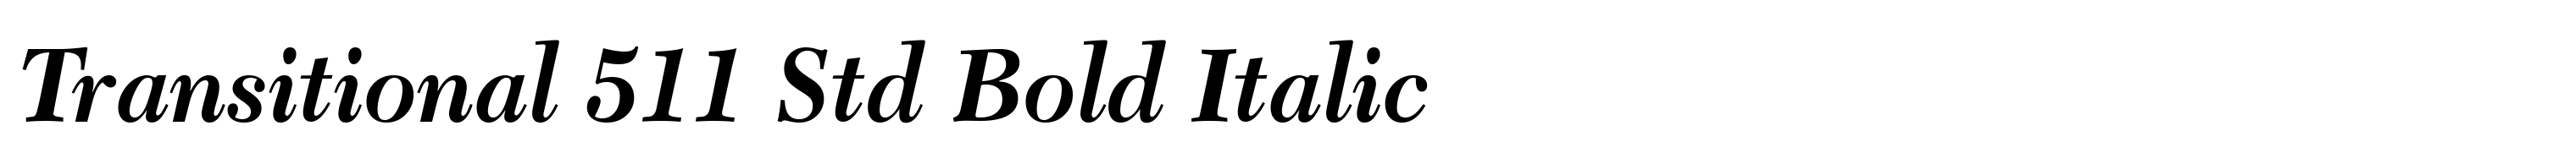 Transitional 511 Std Bold Italic